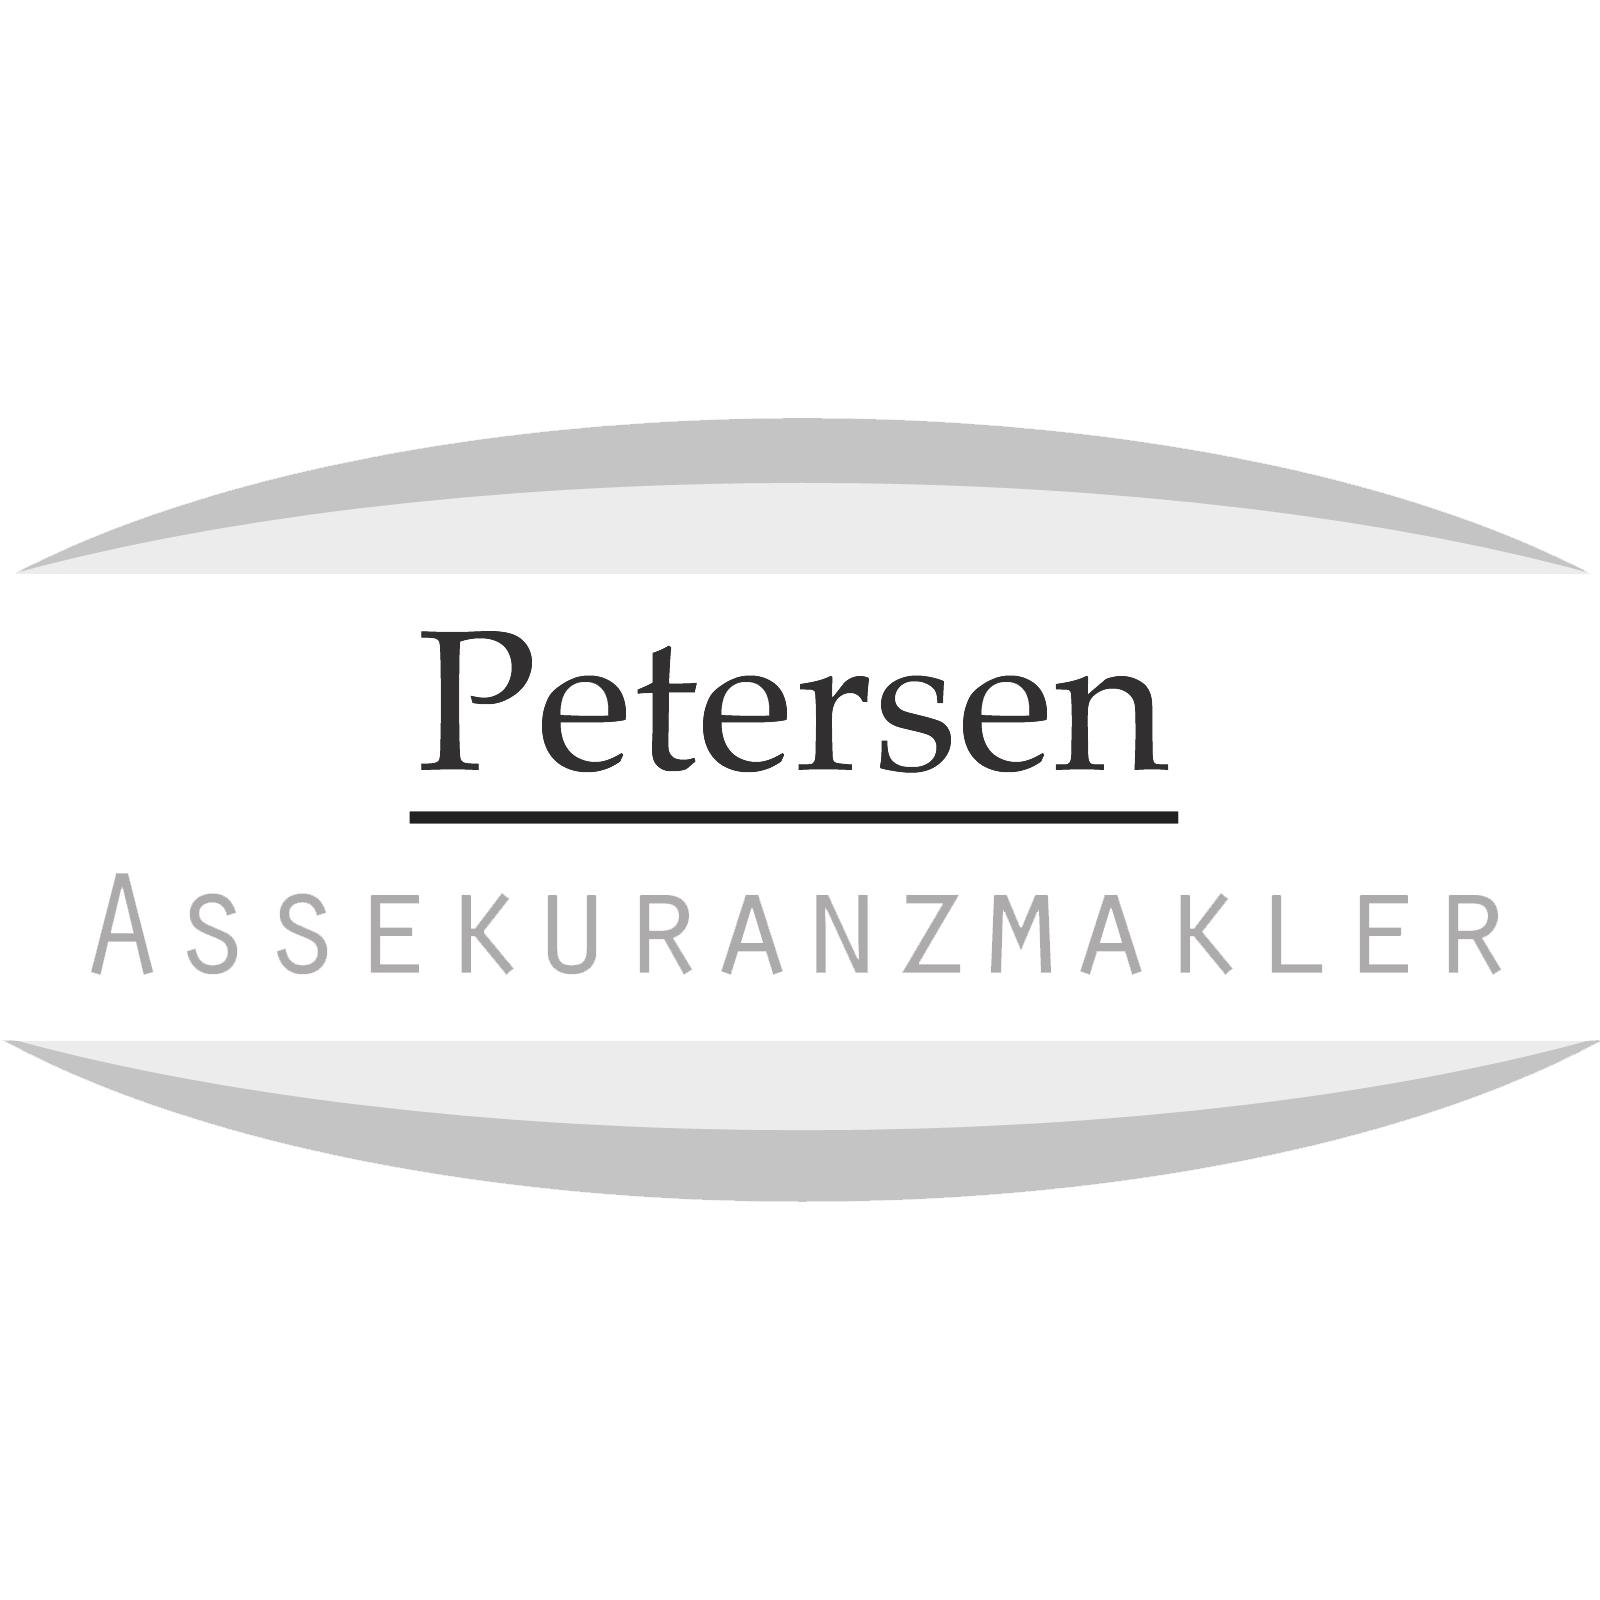 Petersen Assekuranzmakler Logo